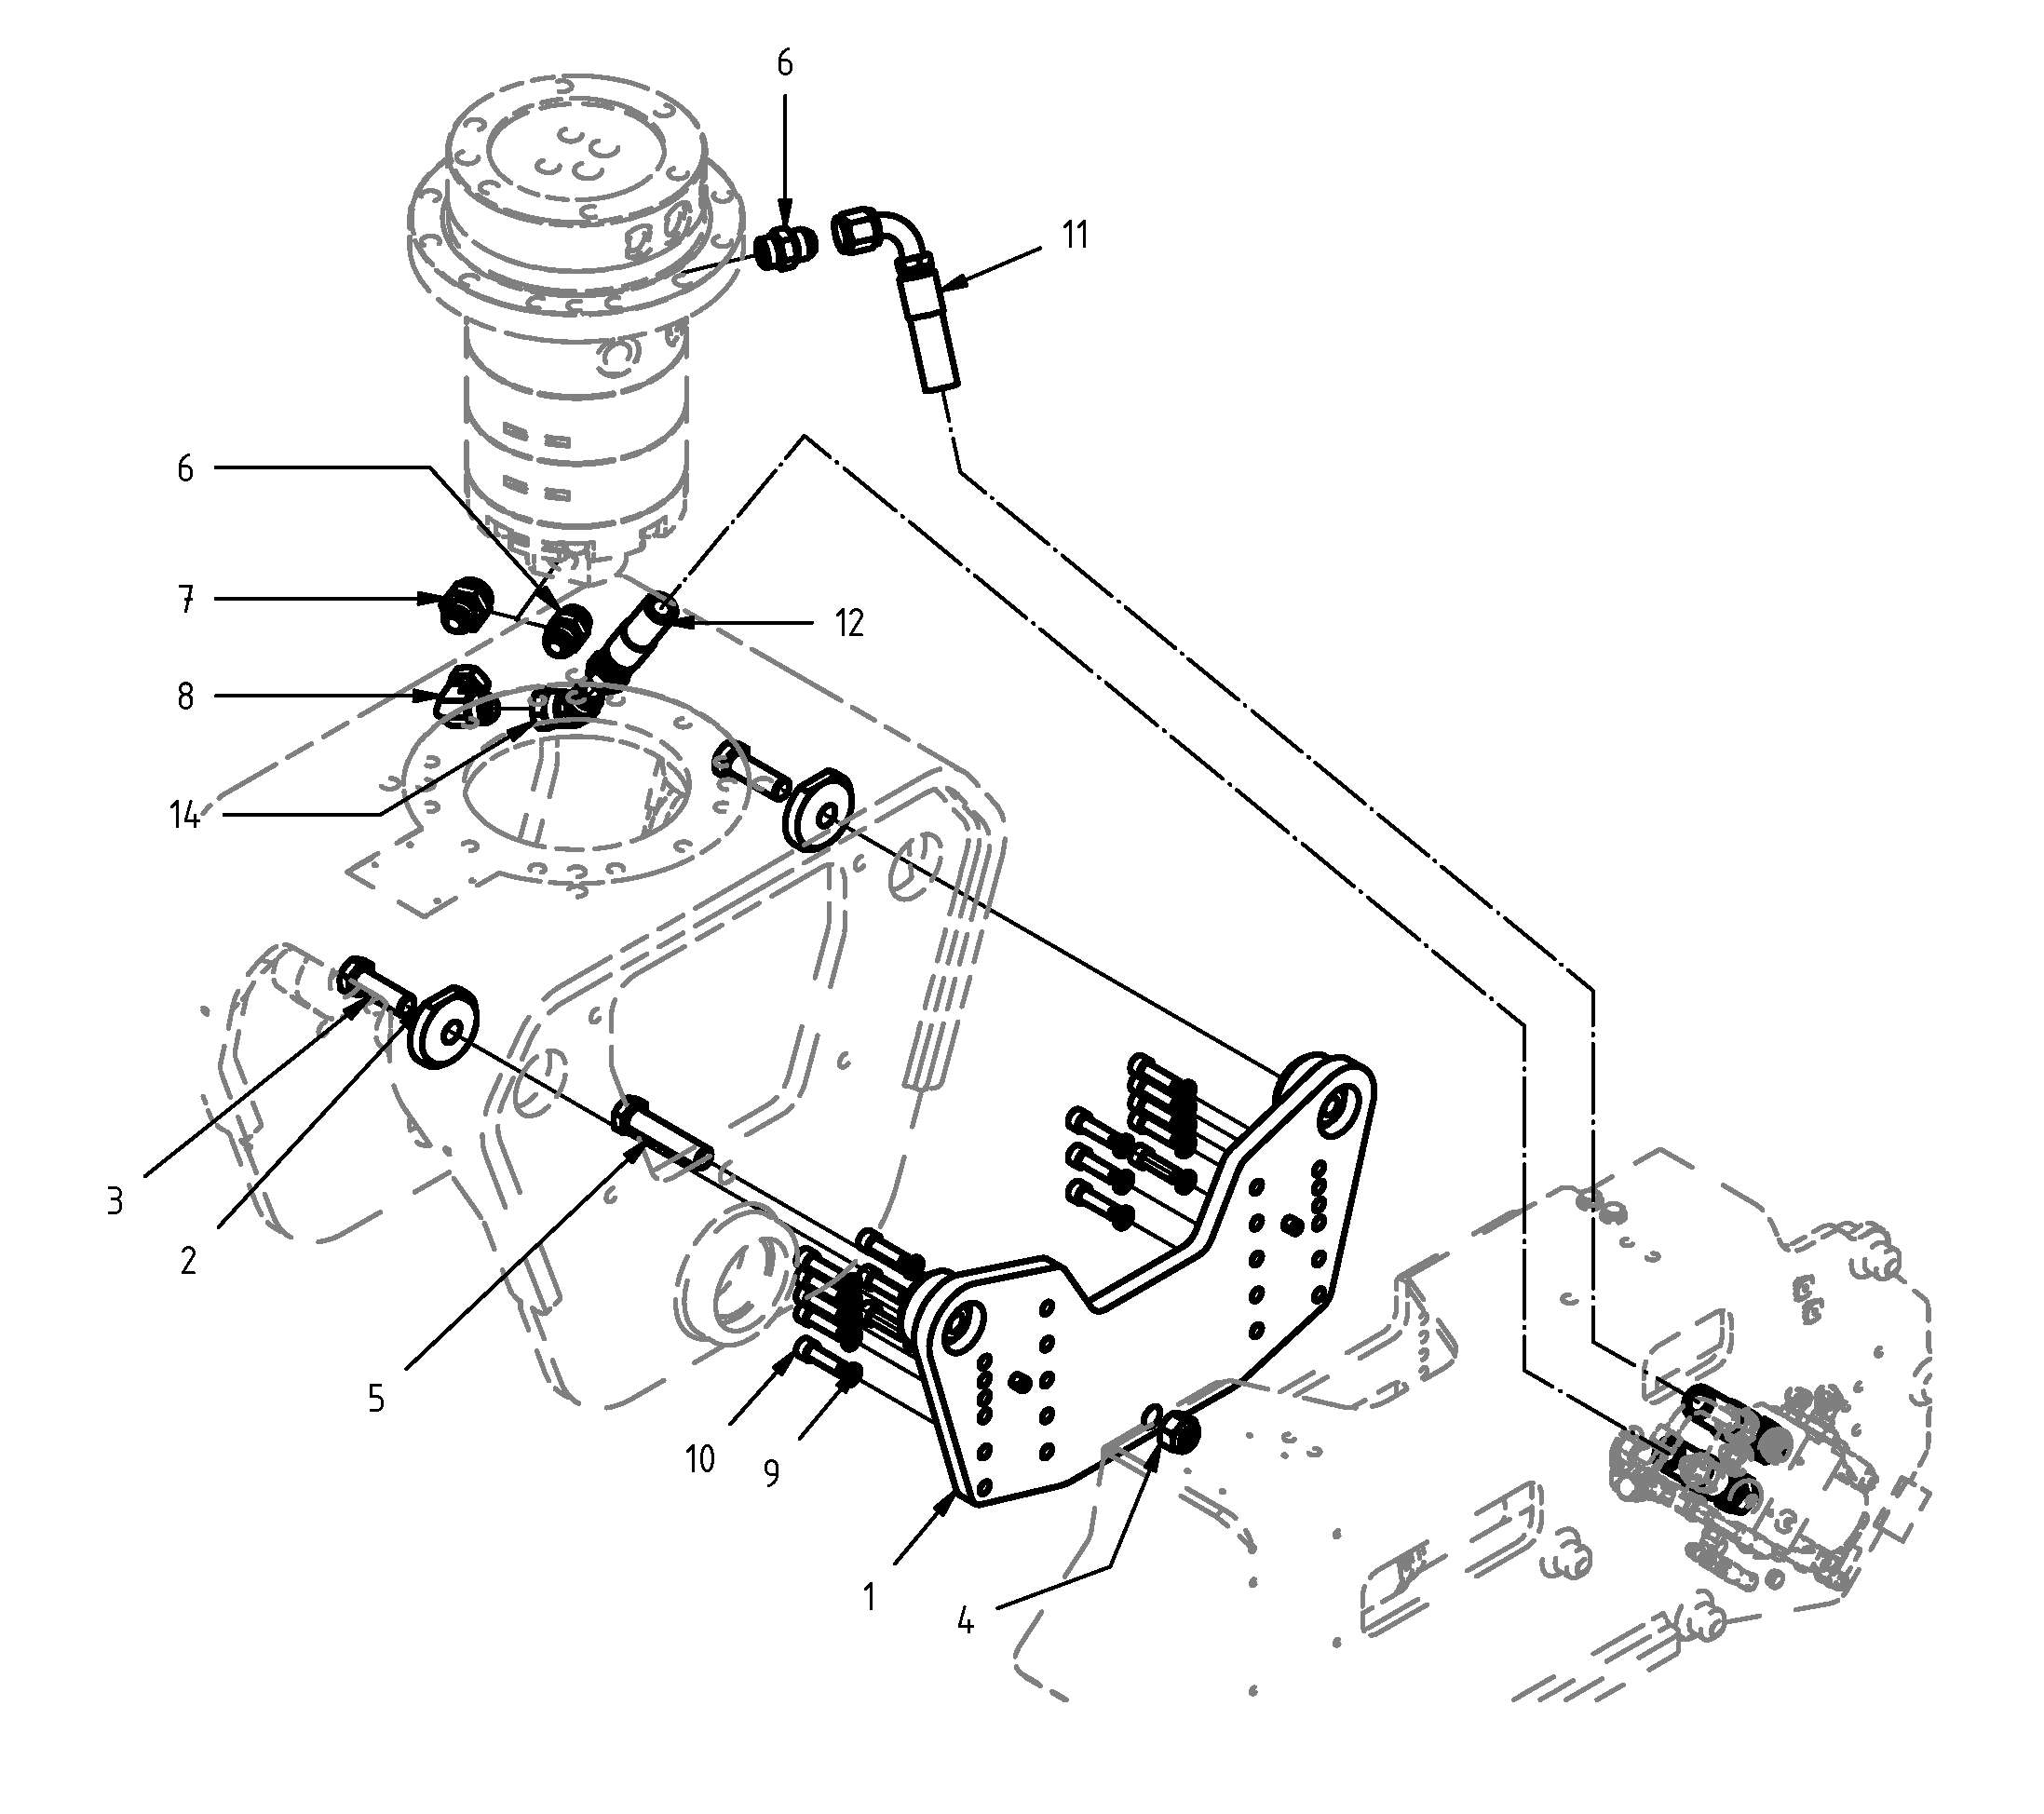 Kit de montage rotateur IR12